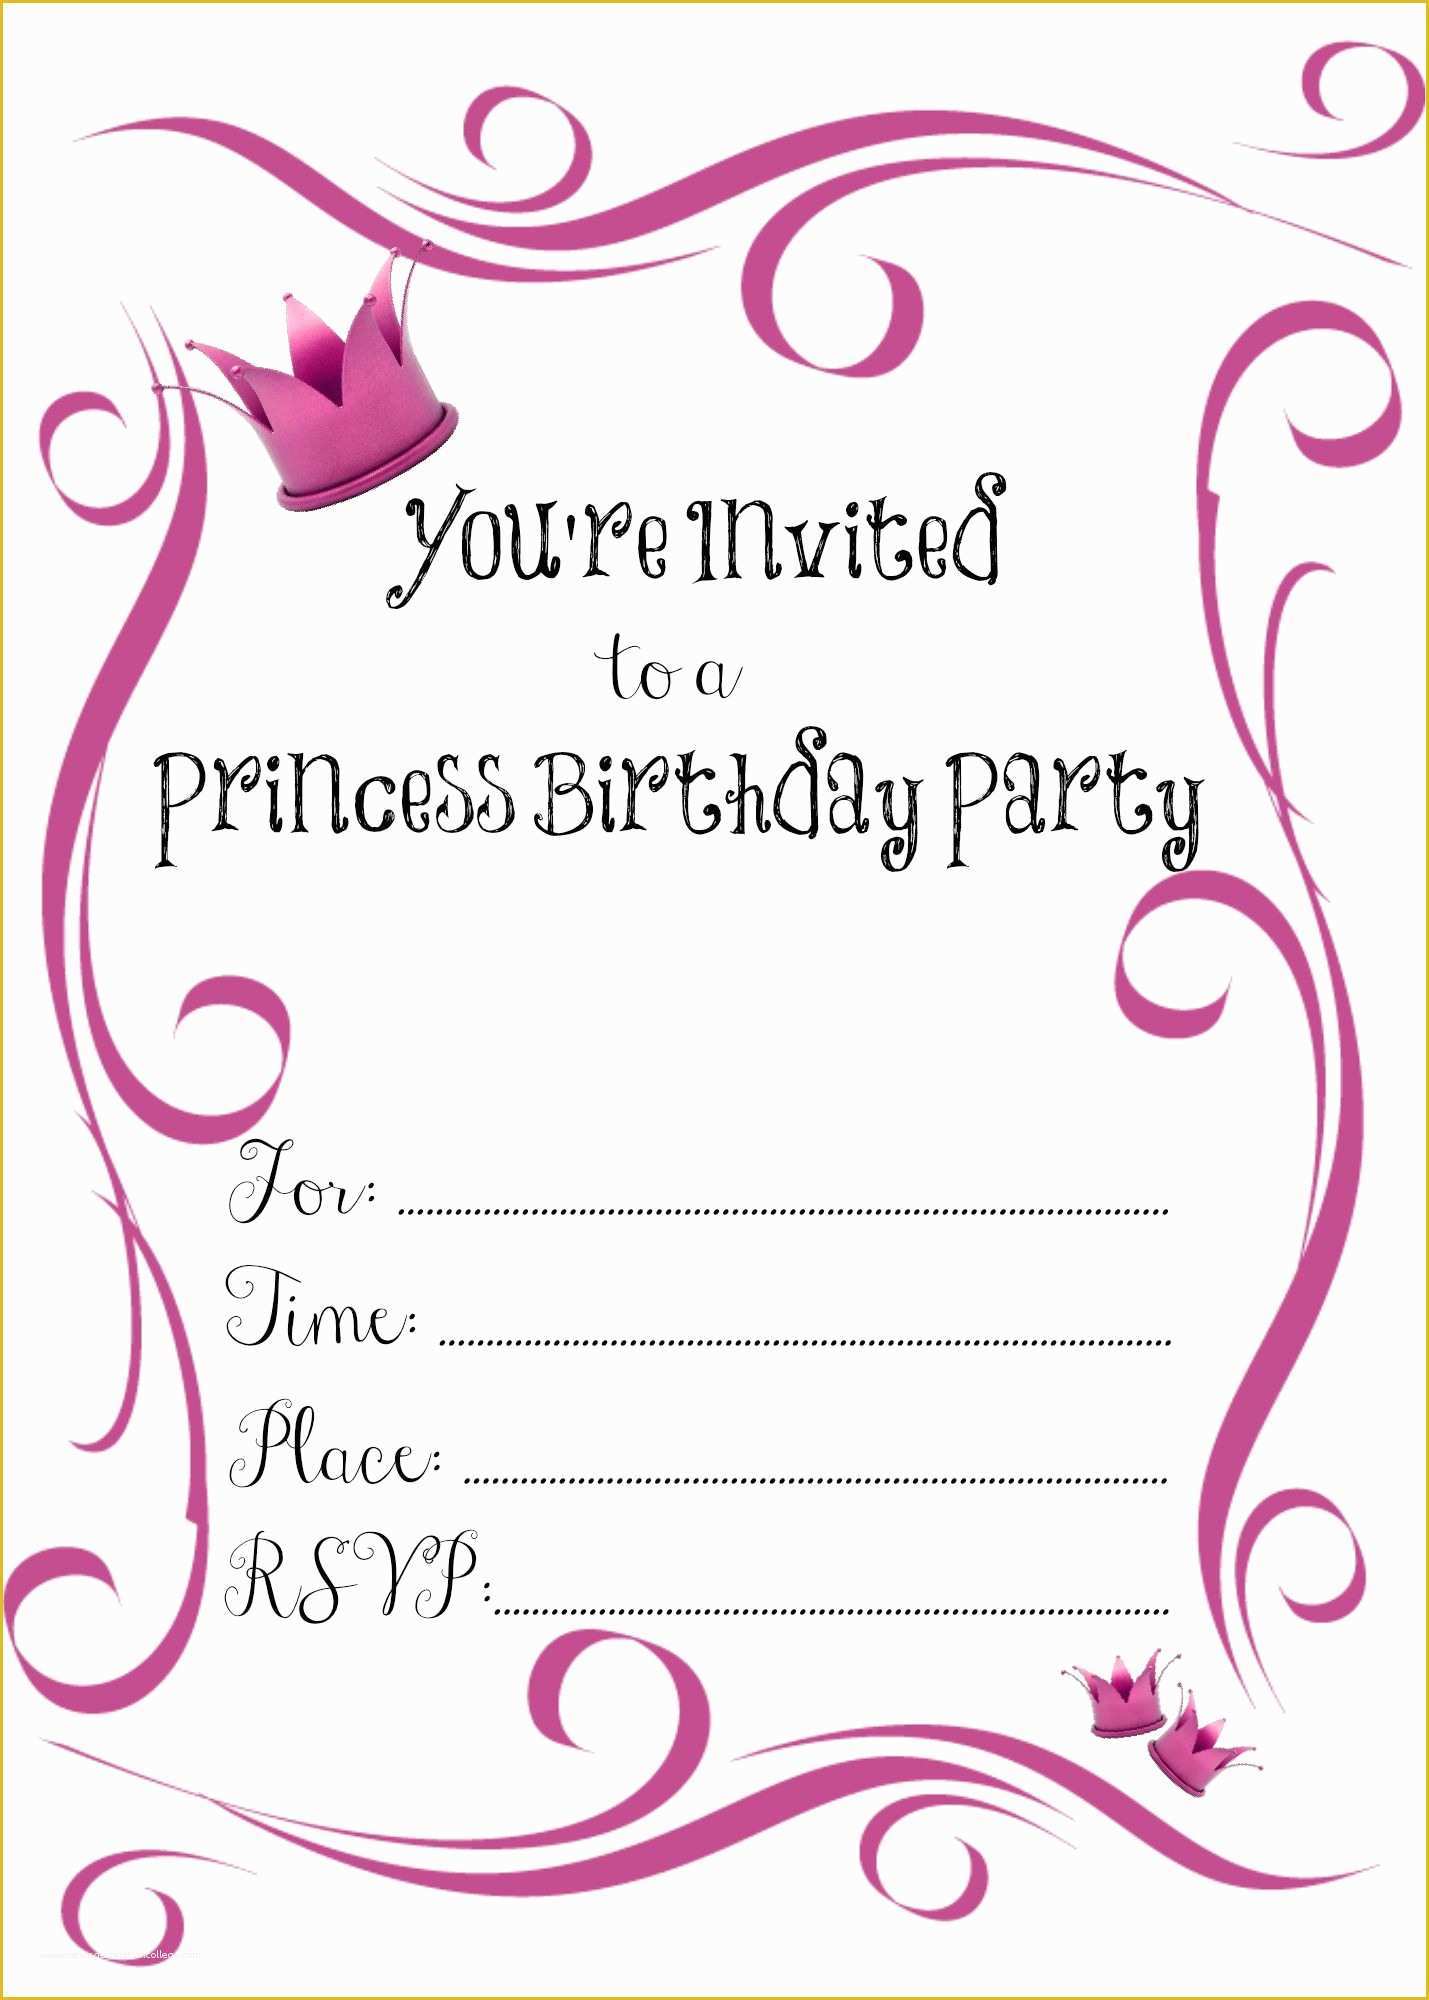 Girl Birthday Invitations Templates Free Of 21 Kids Birthday Invitation Wording that We Can Make